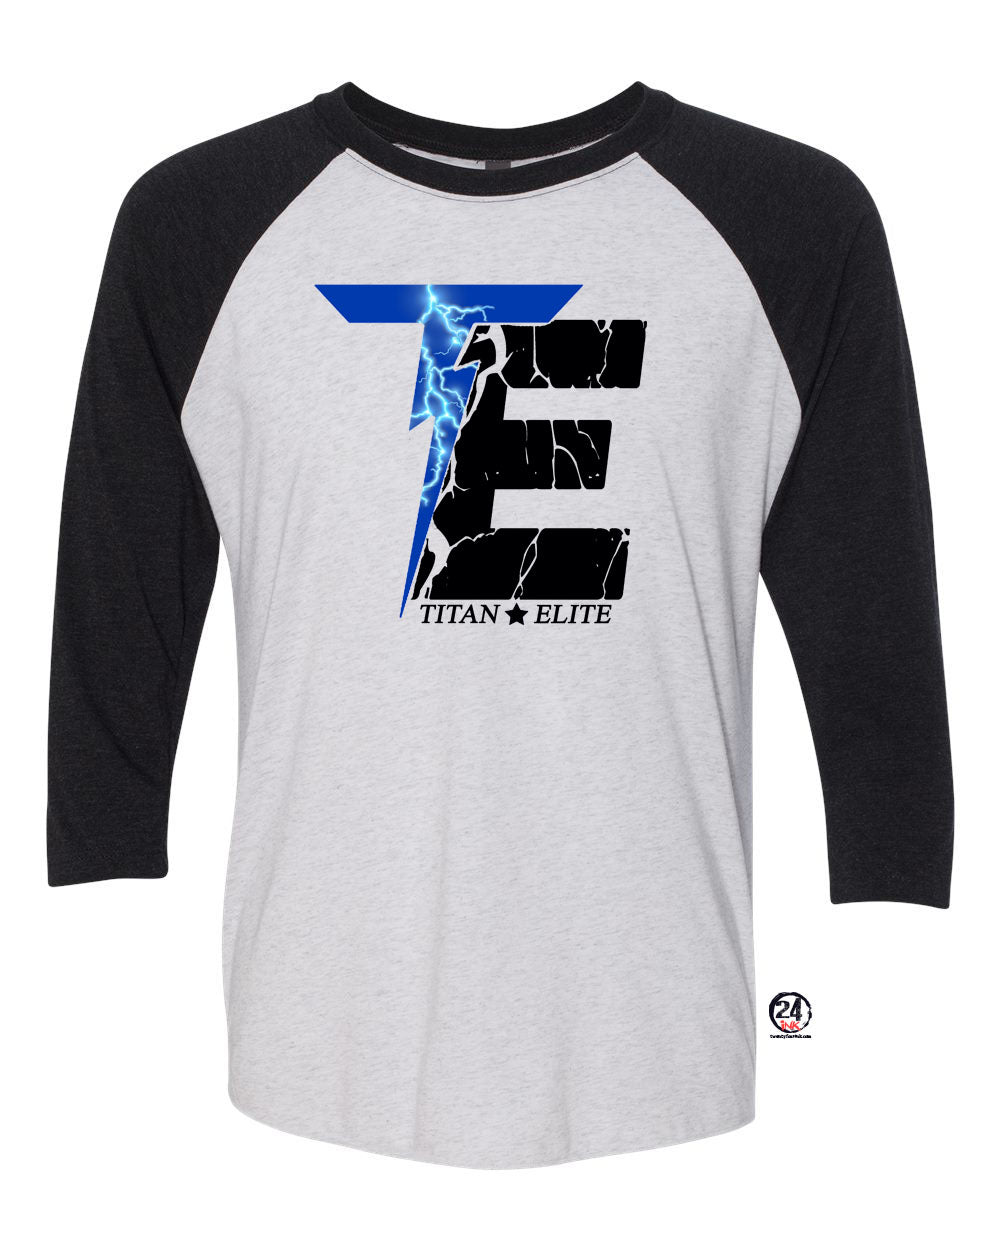 Titan Elite Design 2 raglan shirt